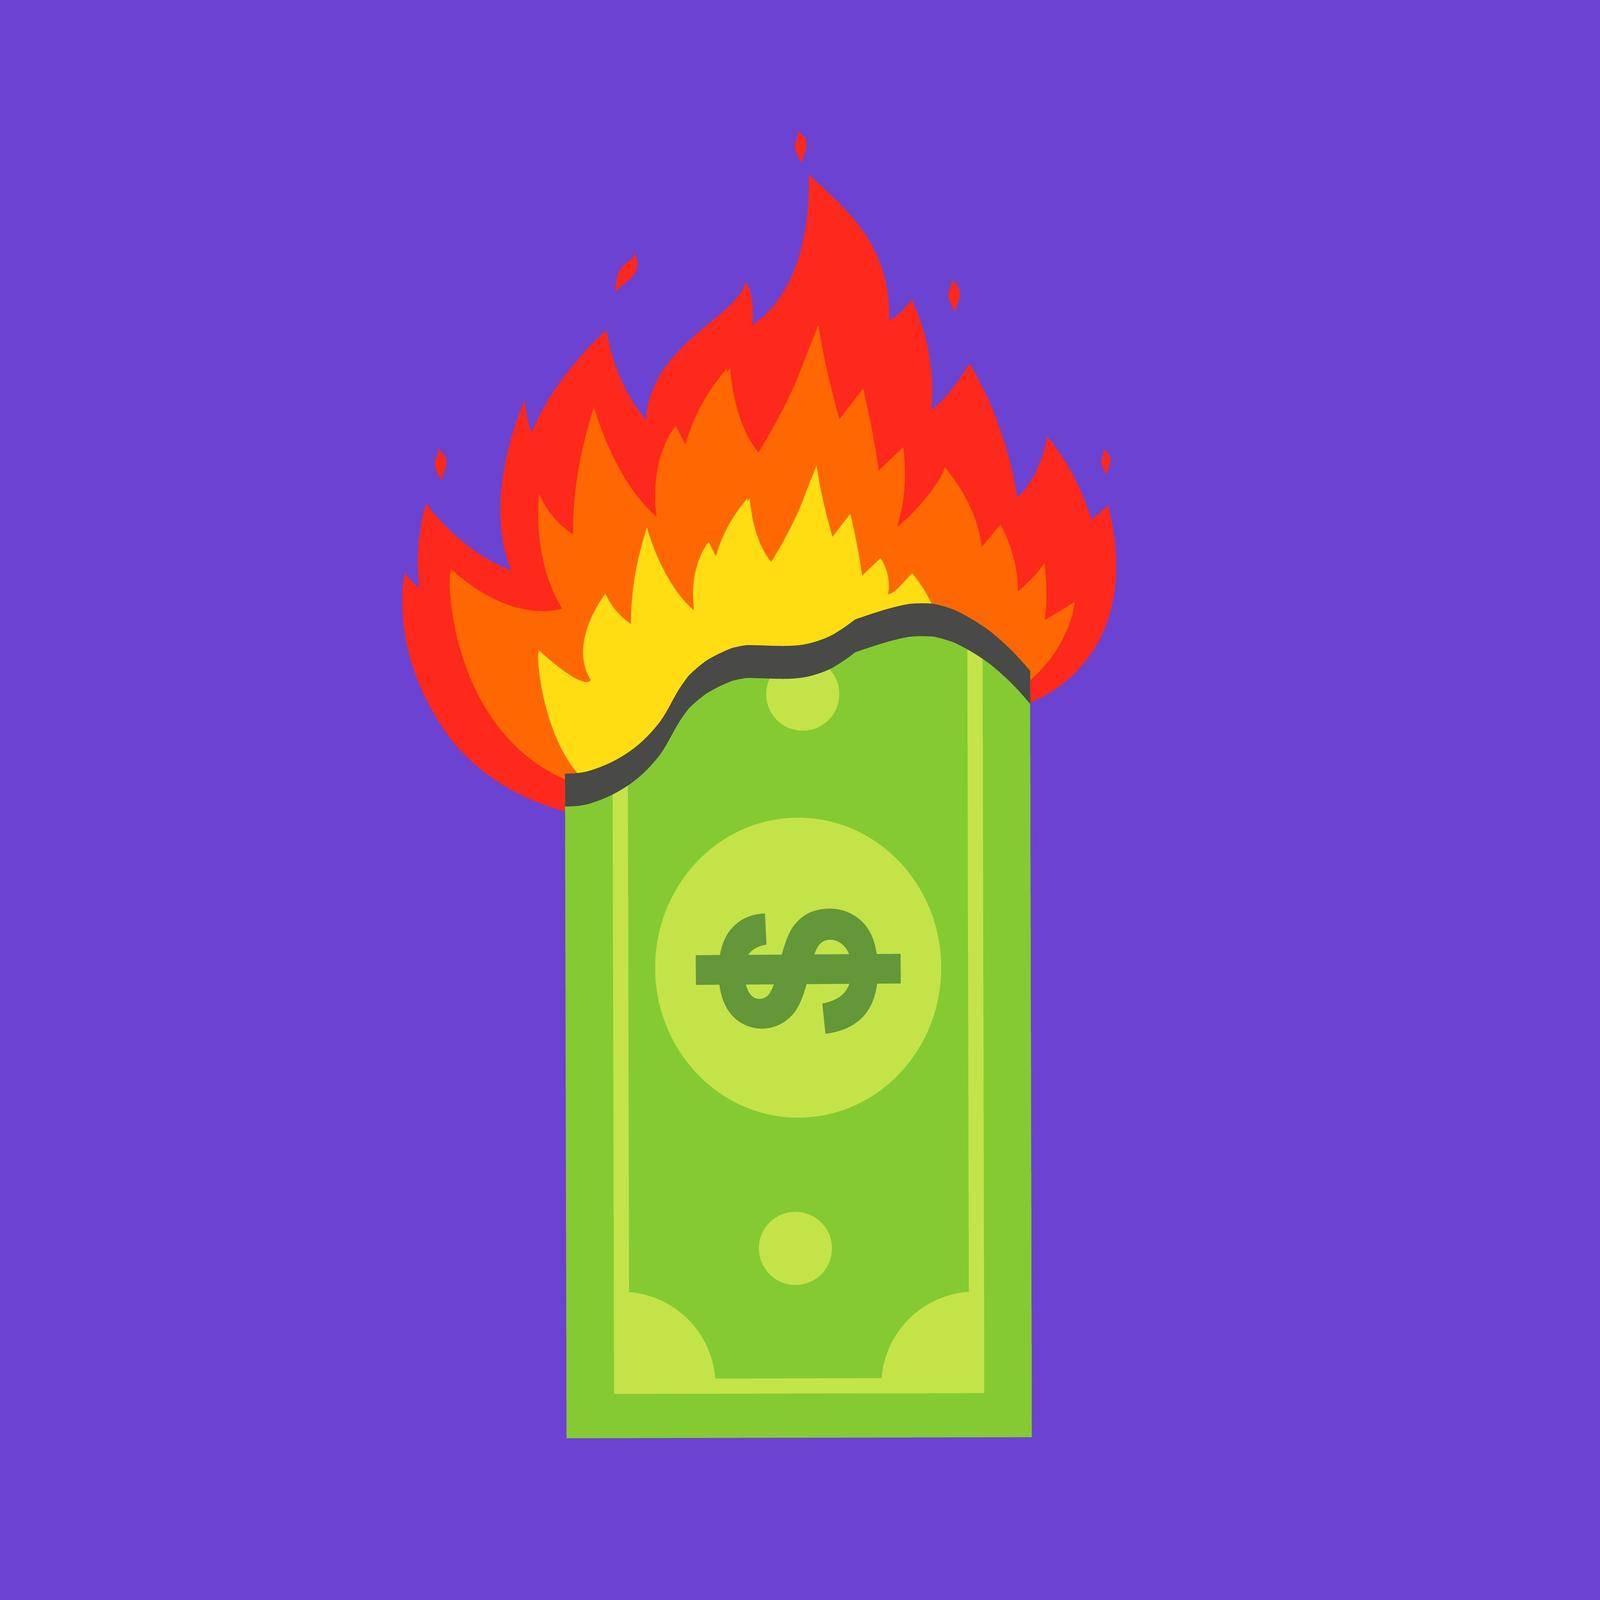 green dollar bill burns. financial crisis by PlutusART